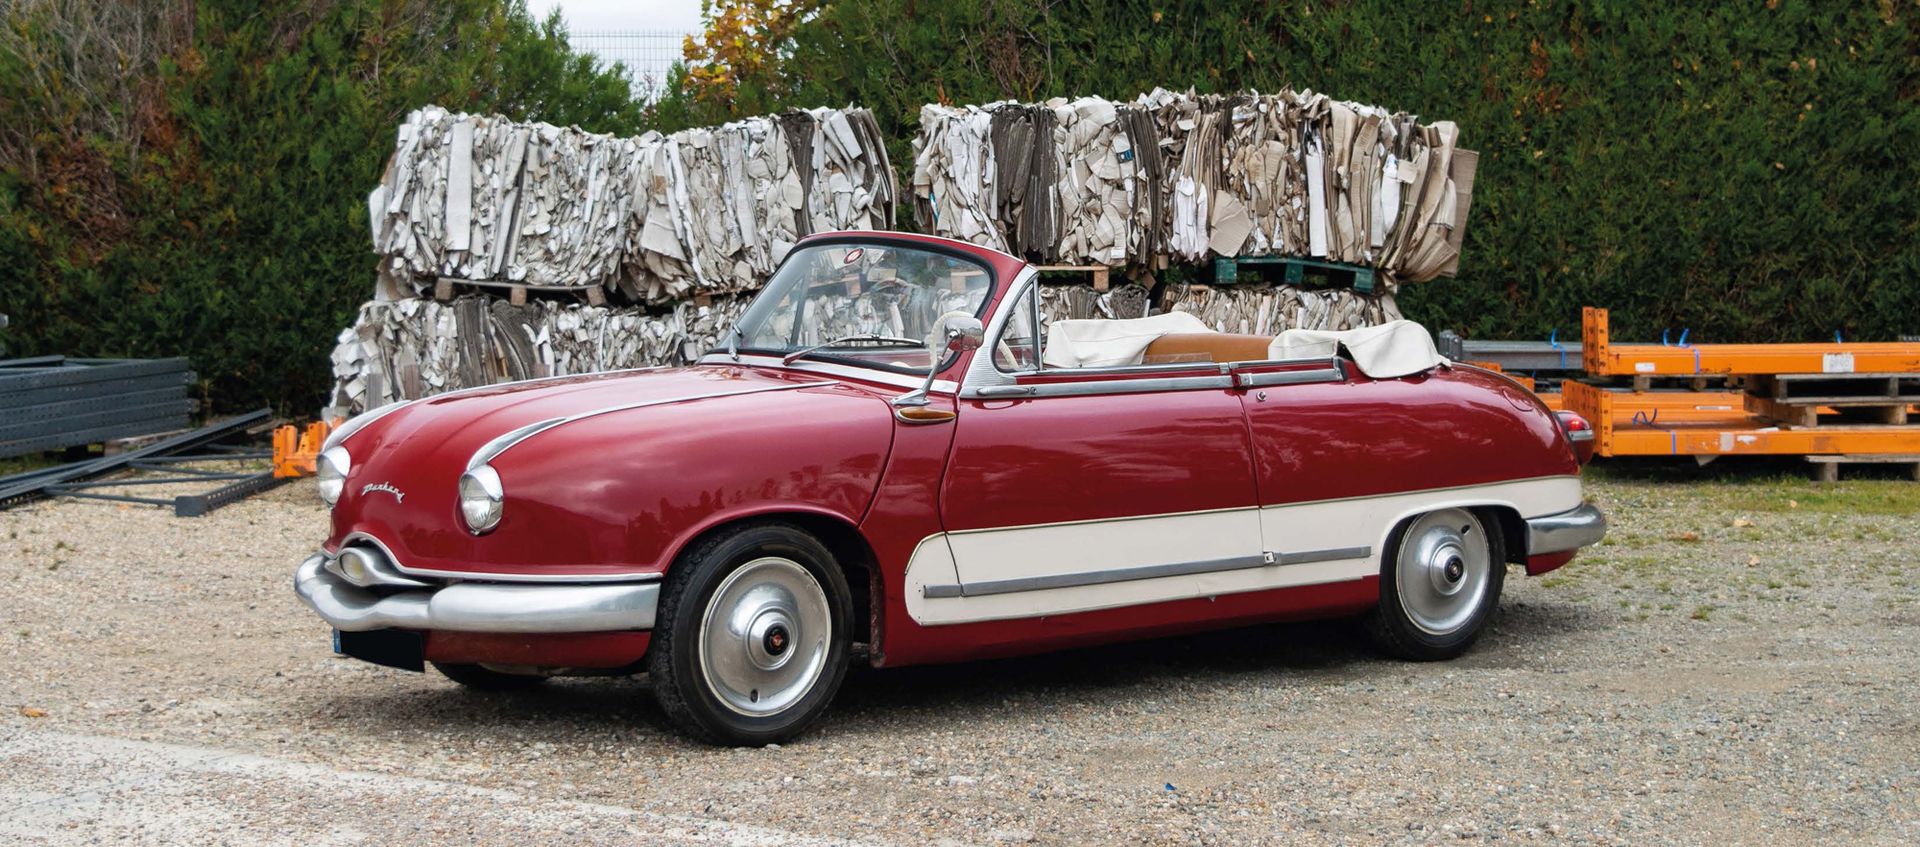 1959 PANHARD Dyna Z17 Cabriolet 
罕见的Z17 Tiger

成熟而高效的机械师

旧的修复工作将被接管



法国注册

底盘&hellip;